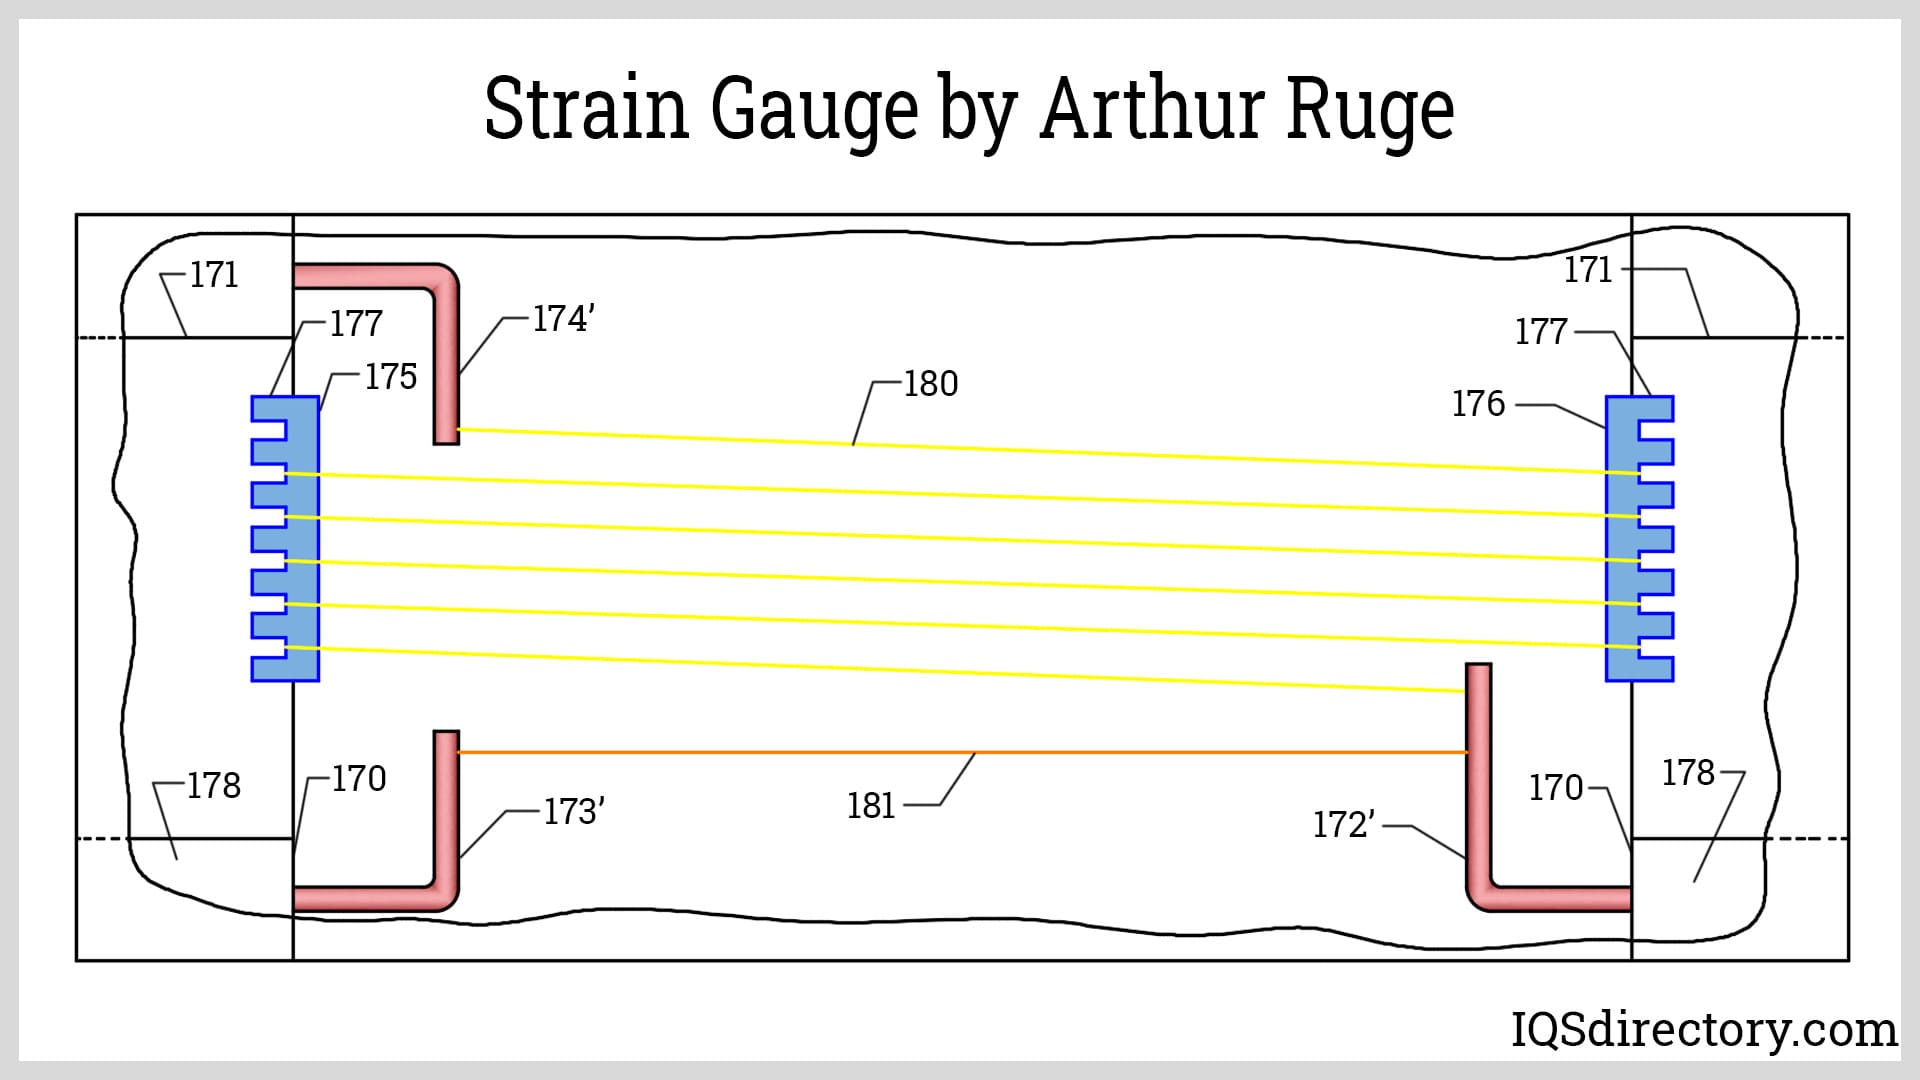 Strain Gauge by Arthur Ruge